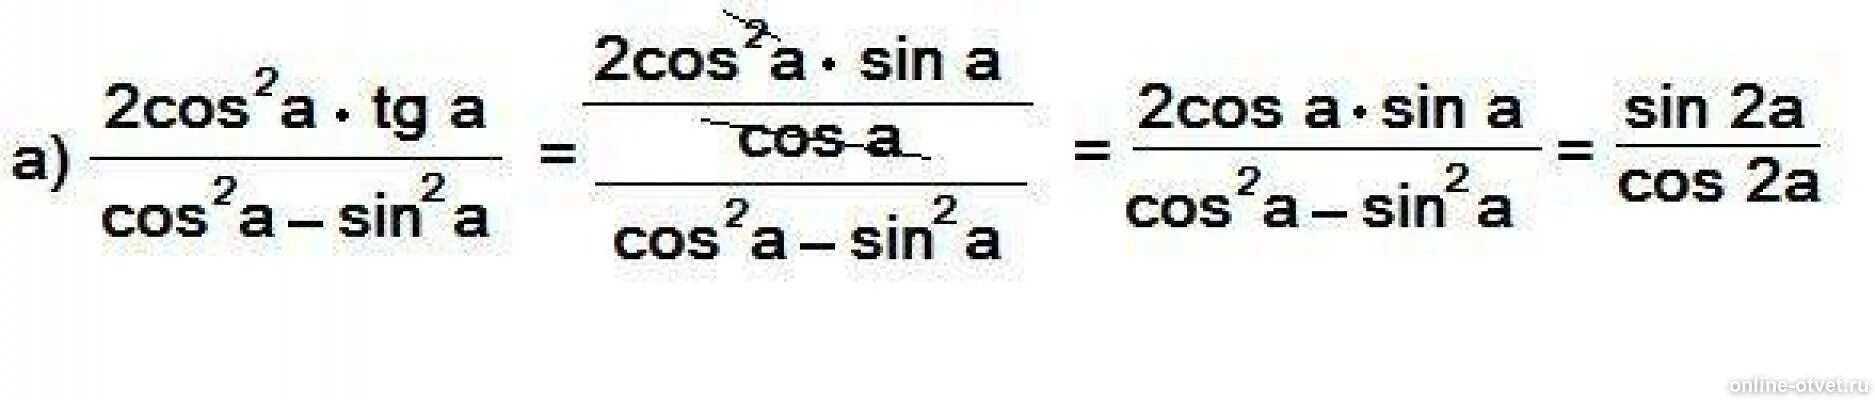 Cos a b cos a b упростить выражение. Упростить выражение sin b/cos b - sin b. Cos2a. 1-Cos2a формула. 2cos π 2